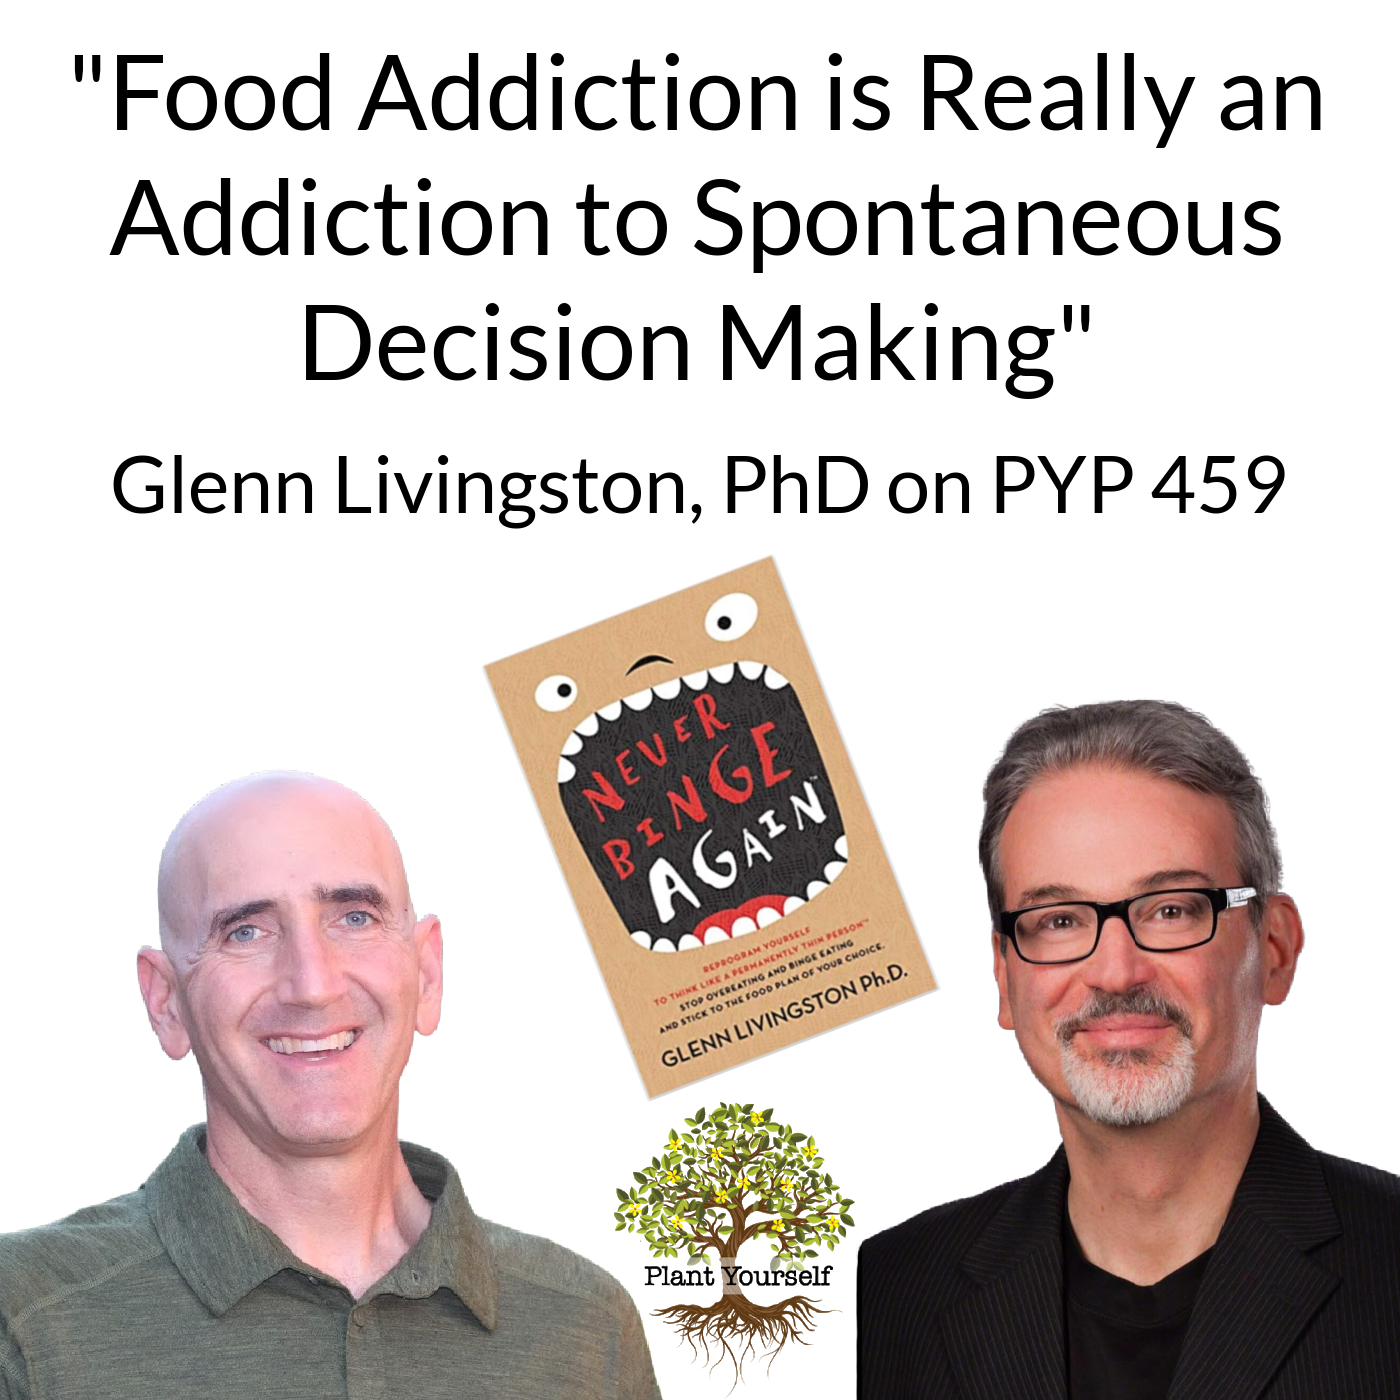 Addicted to Spontaneous Decision-Making: Glenn Livingston, PhD on PYP 459